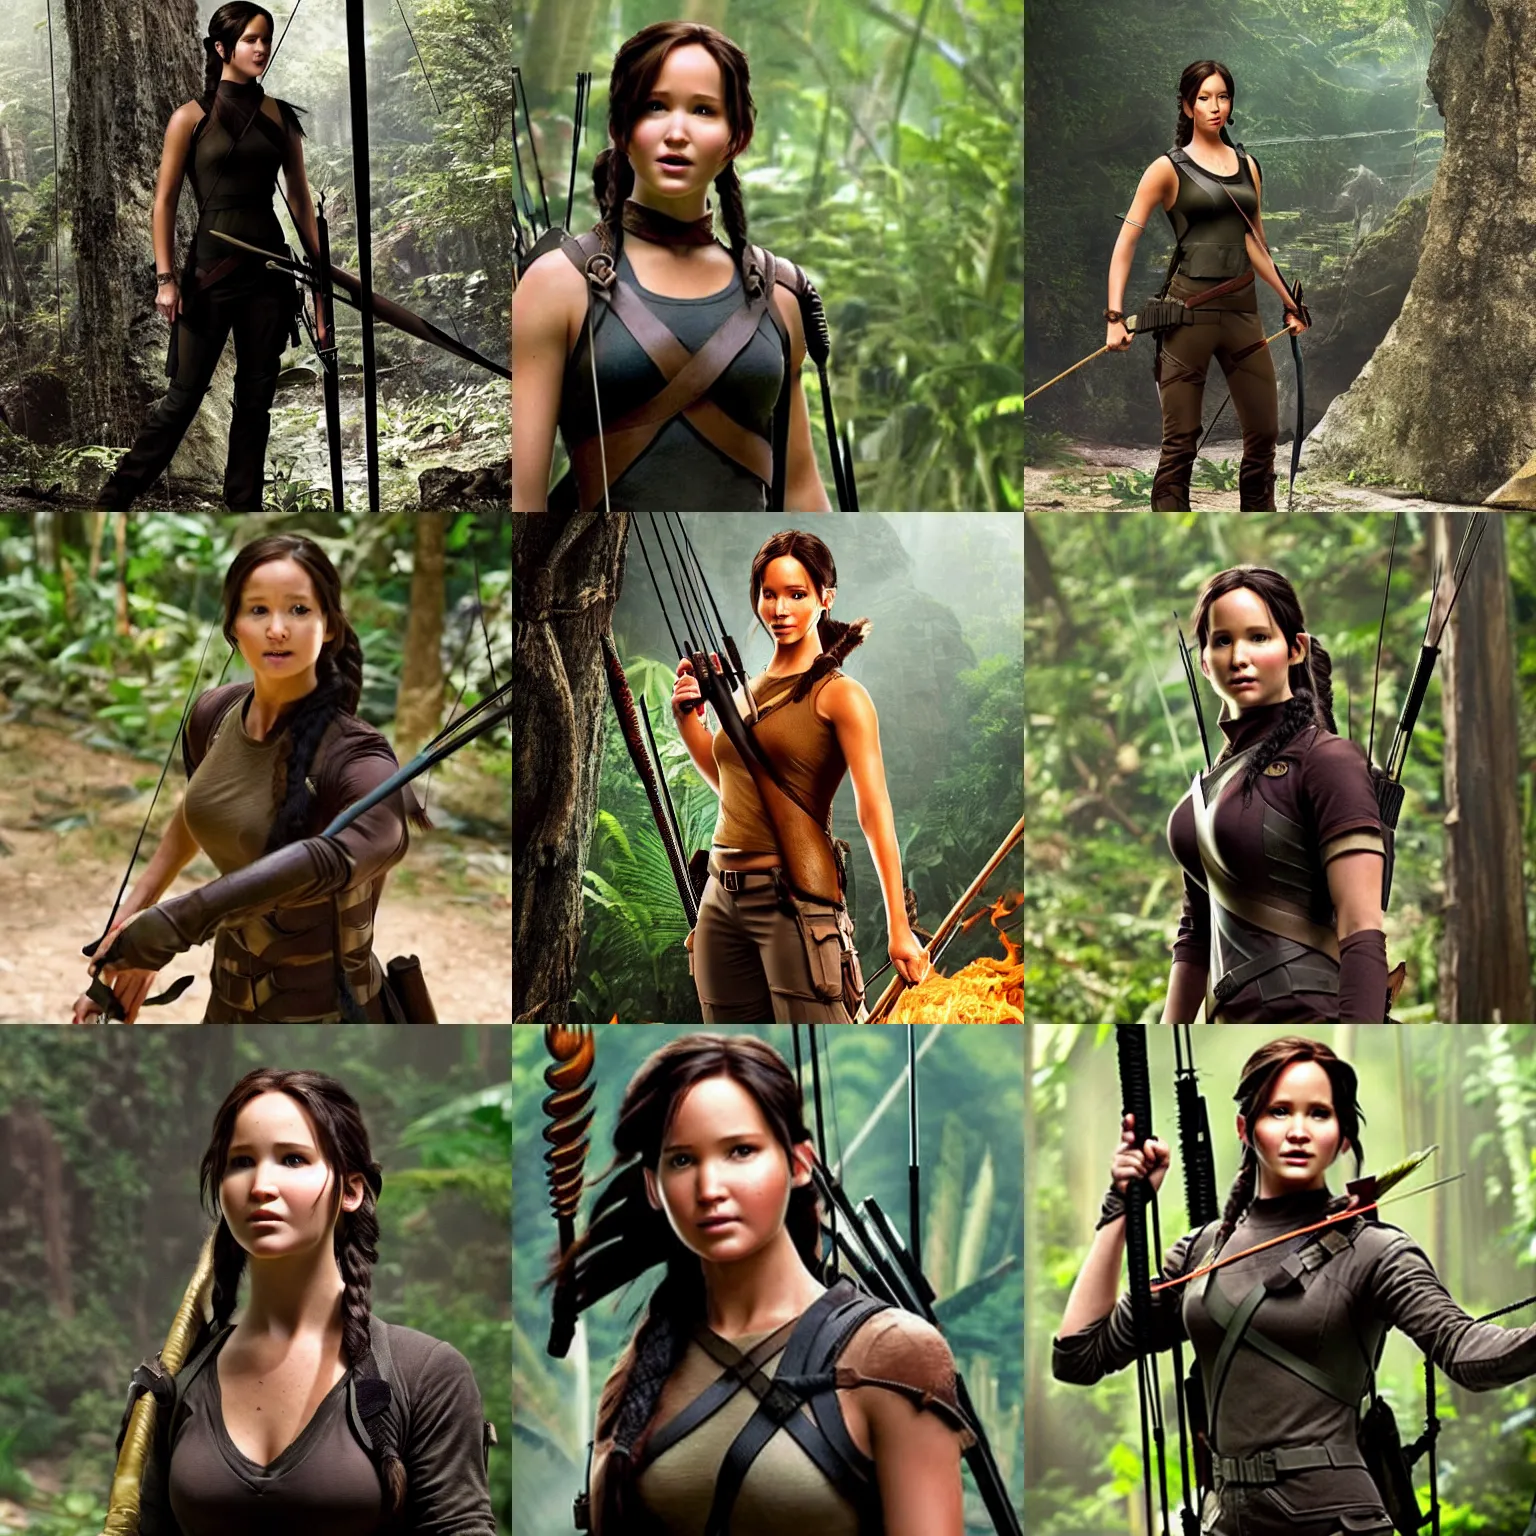 Prompt: Katniss Everdeen as Lara Croft, discovering El Dorado, a city built from gold in a jungle